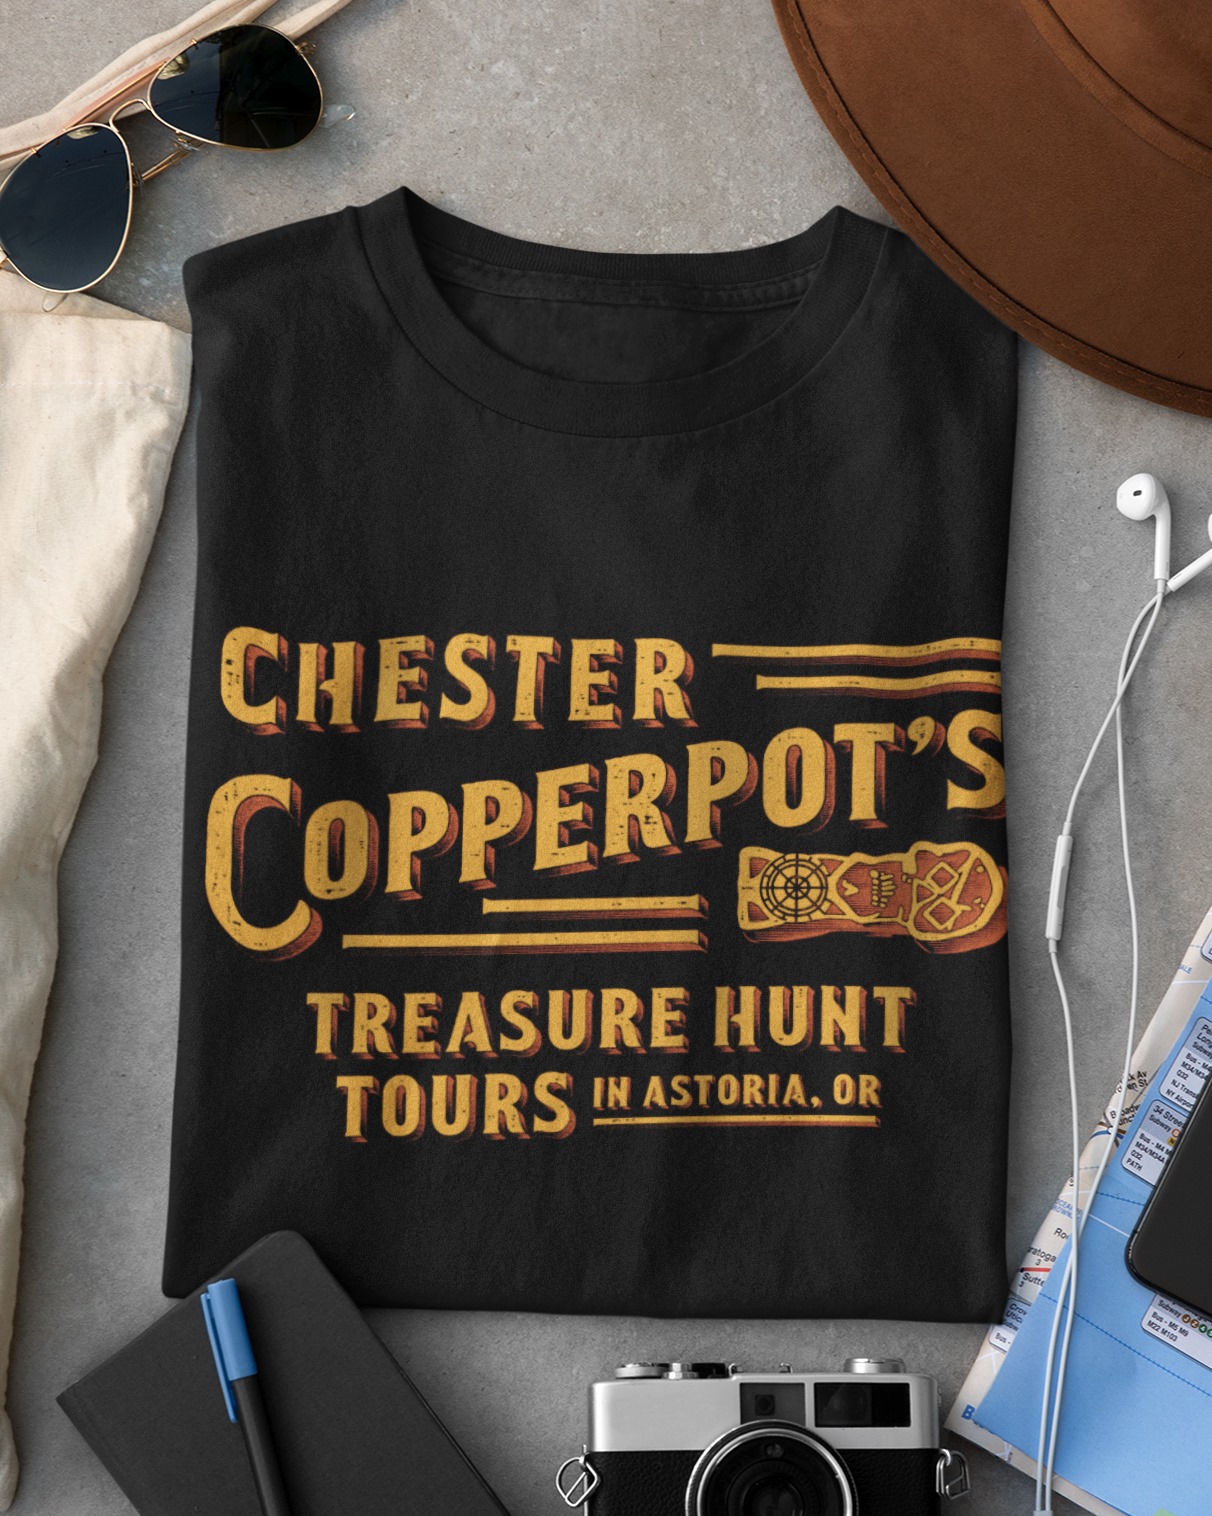 Chester Copperpot's Treasure Hunt Tours In Astoria. Or